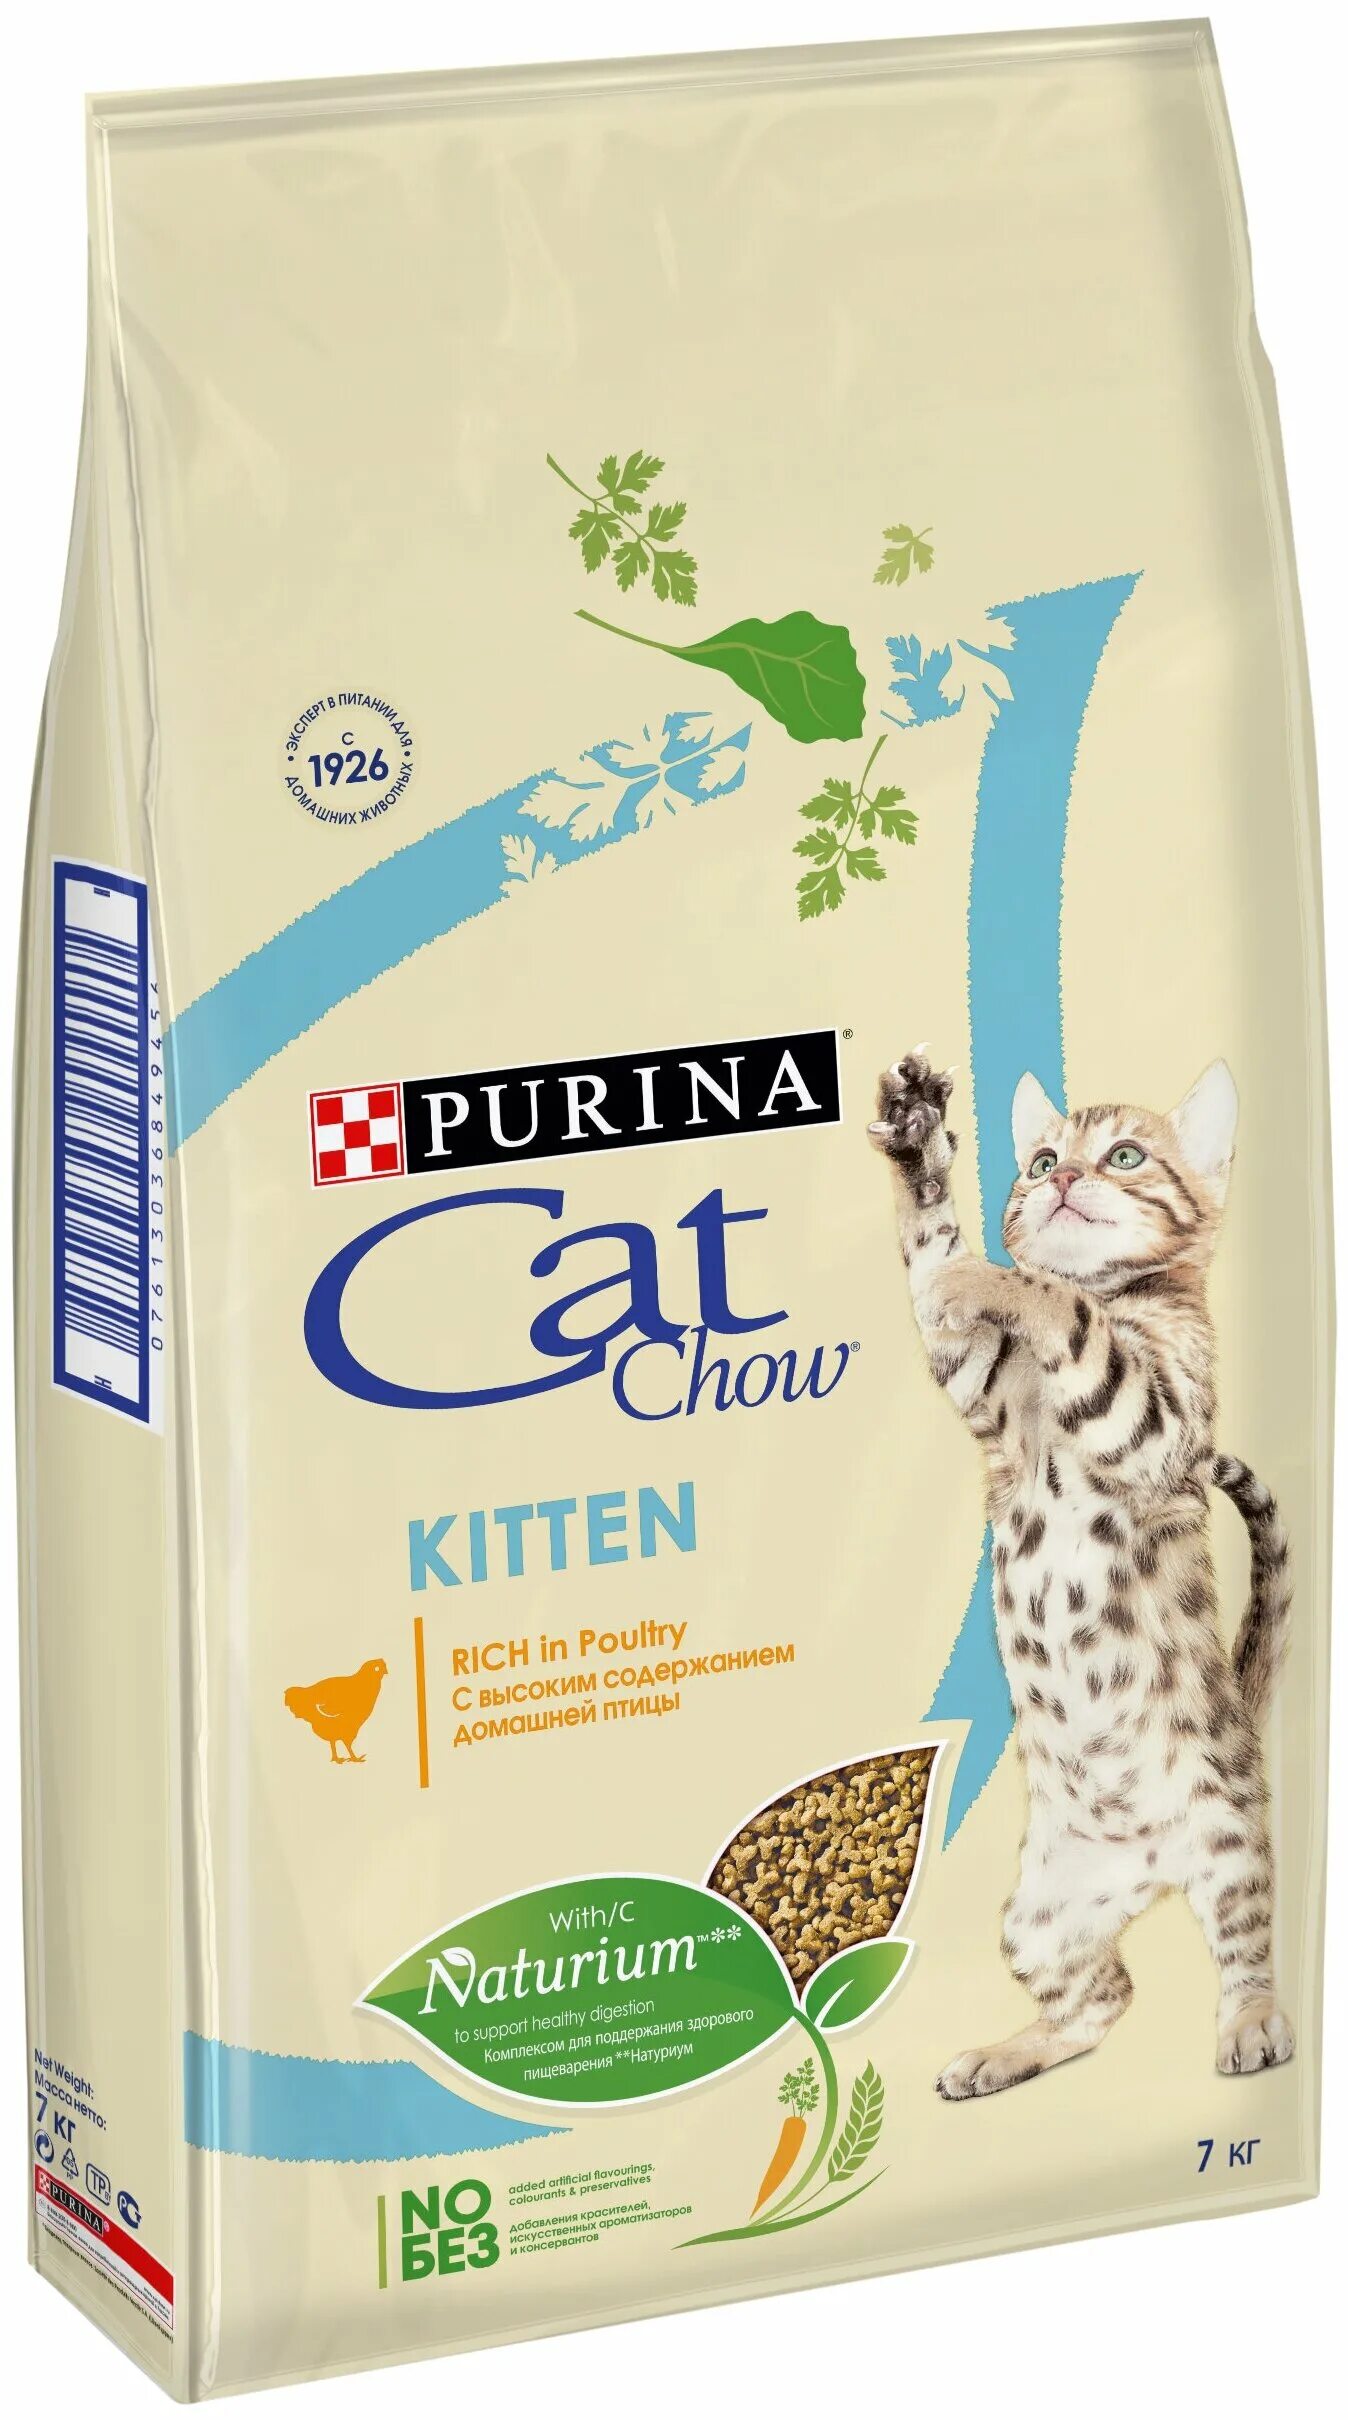 Купить корм кошке cat. Корм для кошек Пурина Cat Chow 7 кг. Сухой корм Cat Chow Adult для кошек с домашней птицей. Purina Cat Chow индейка 400. Cat Chow Hairball Control.